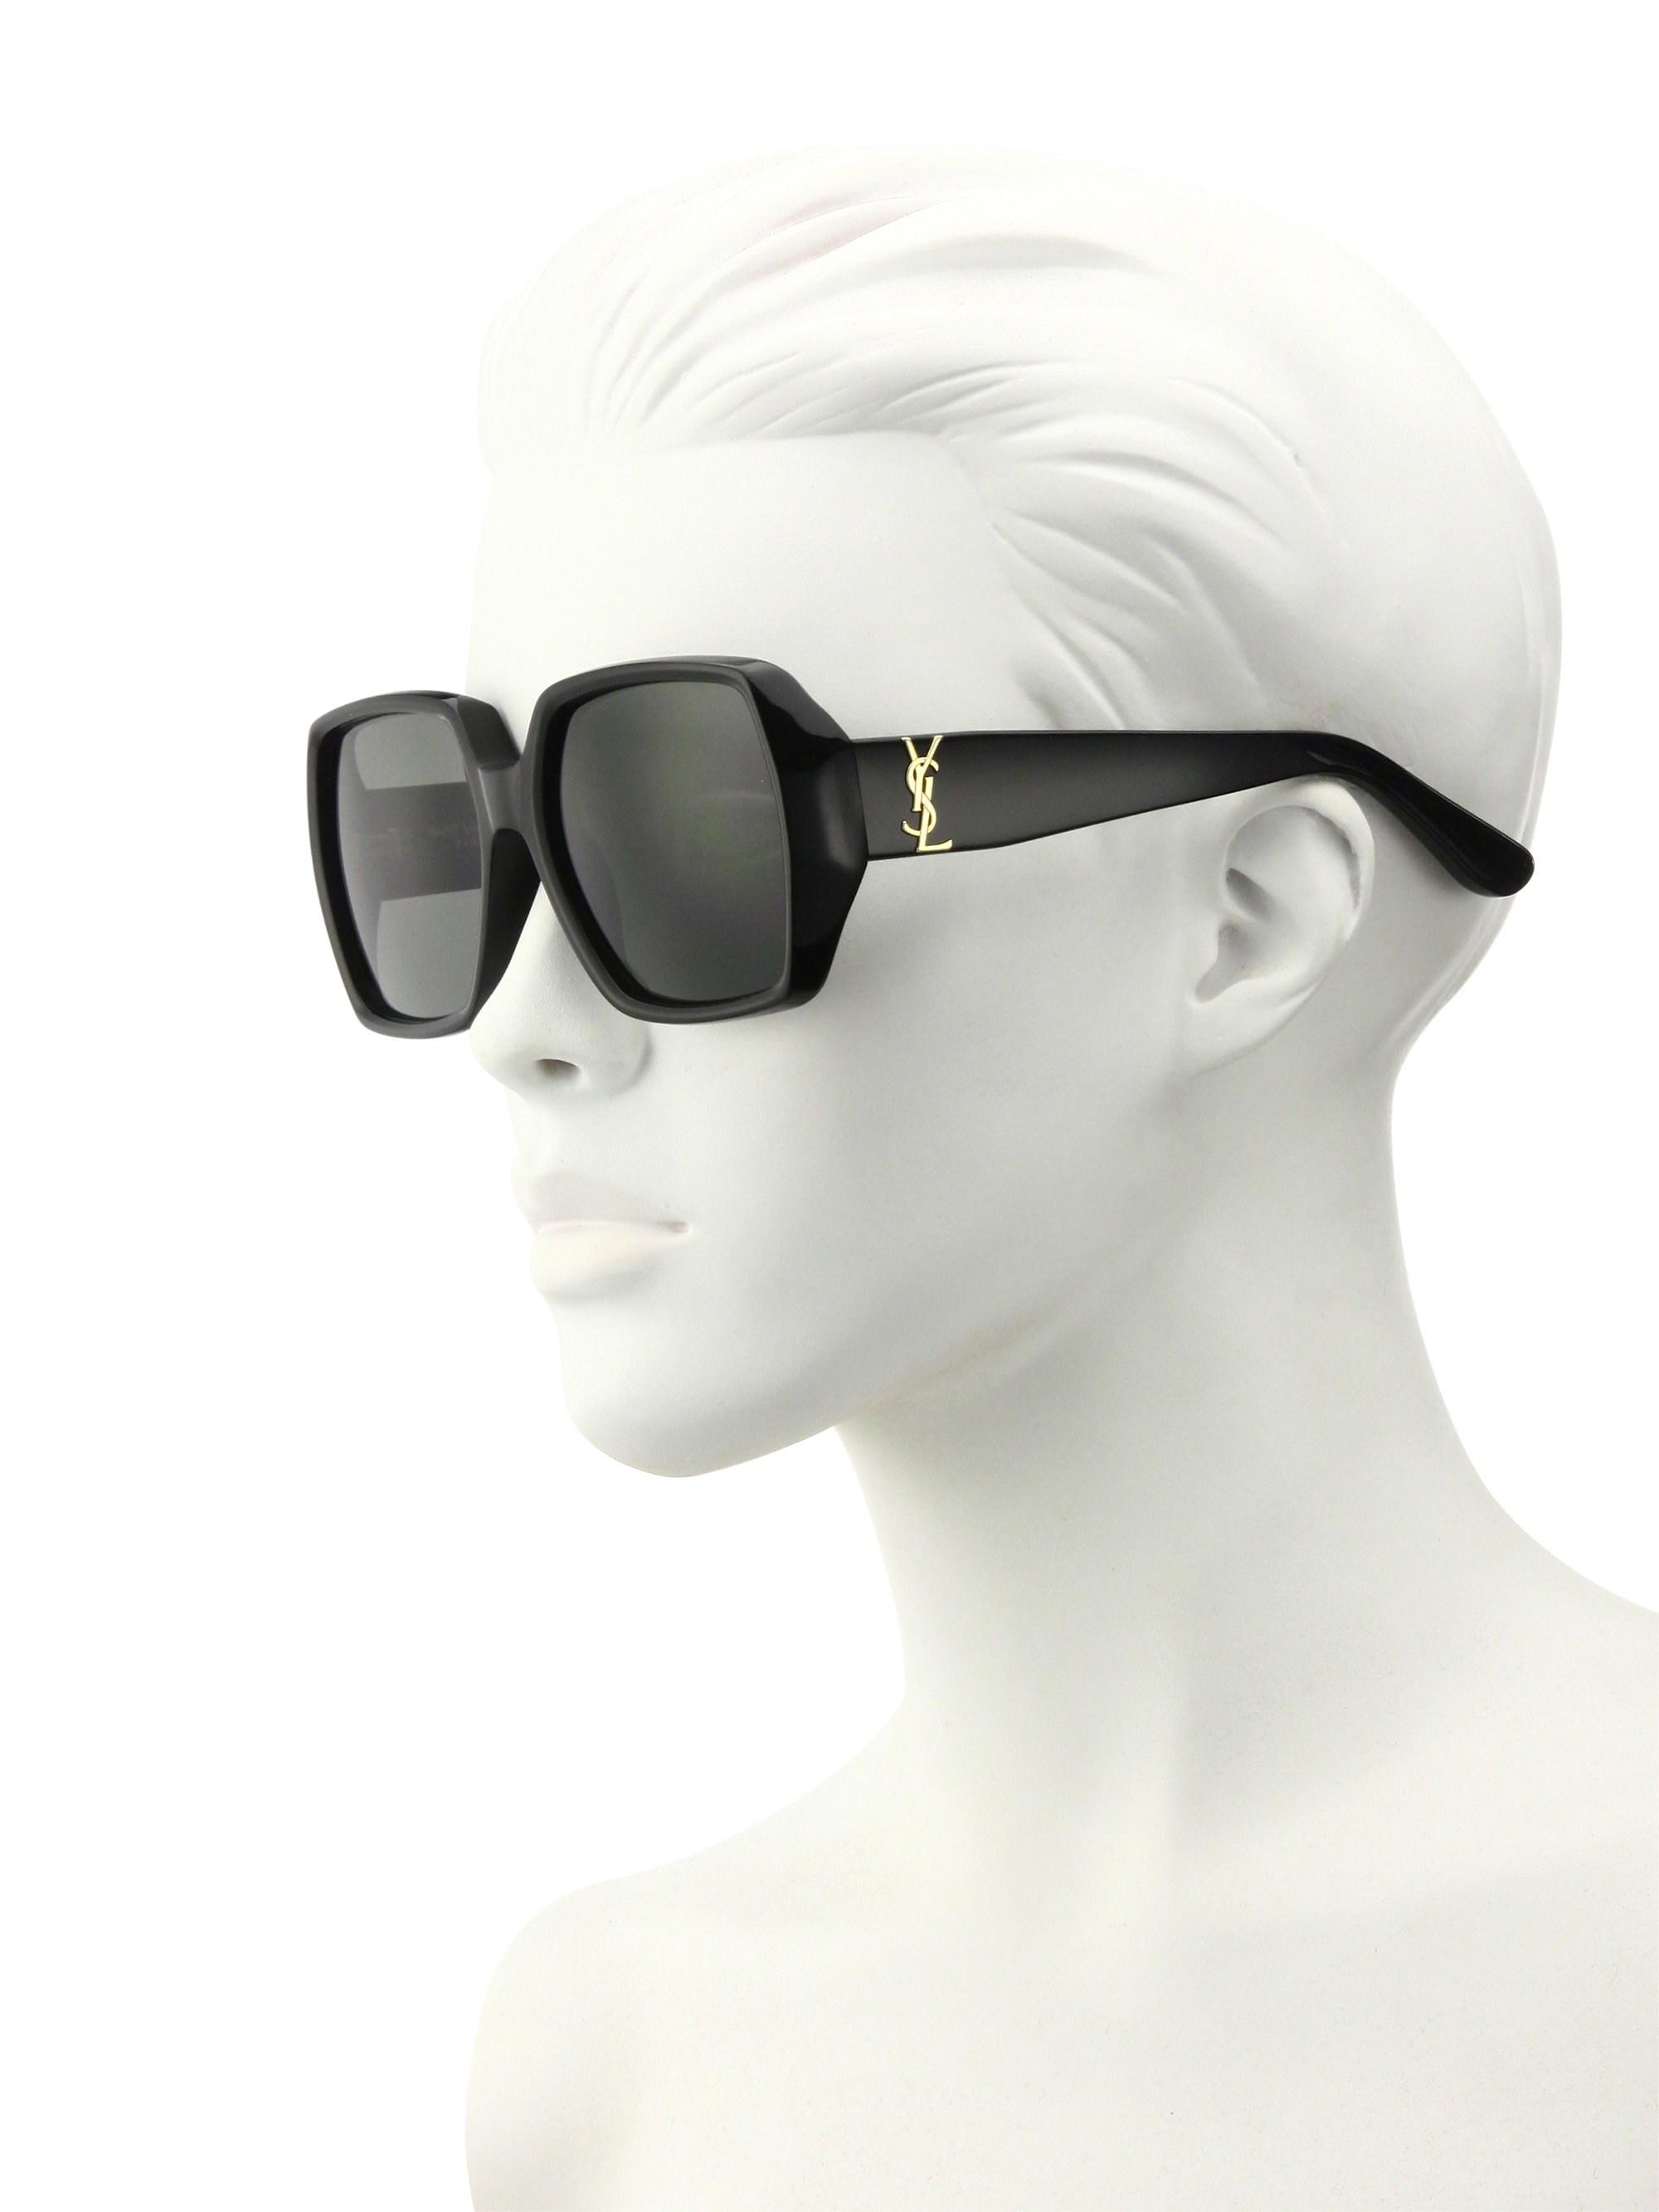 Saint Laurent Women's 58mm Oversized Square Sunglasses - Black | Lyst